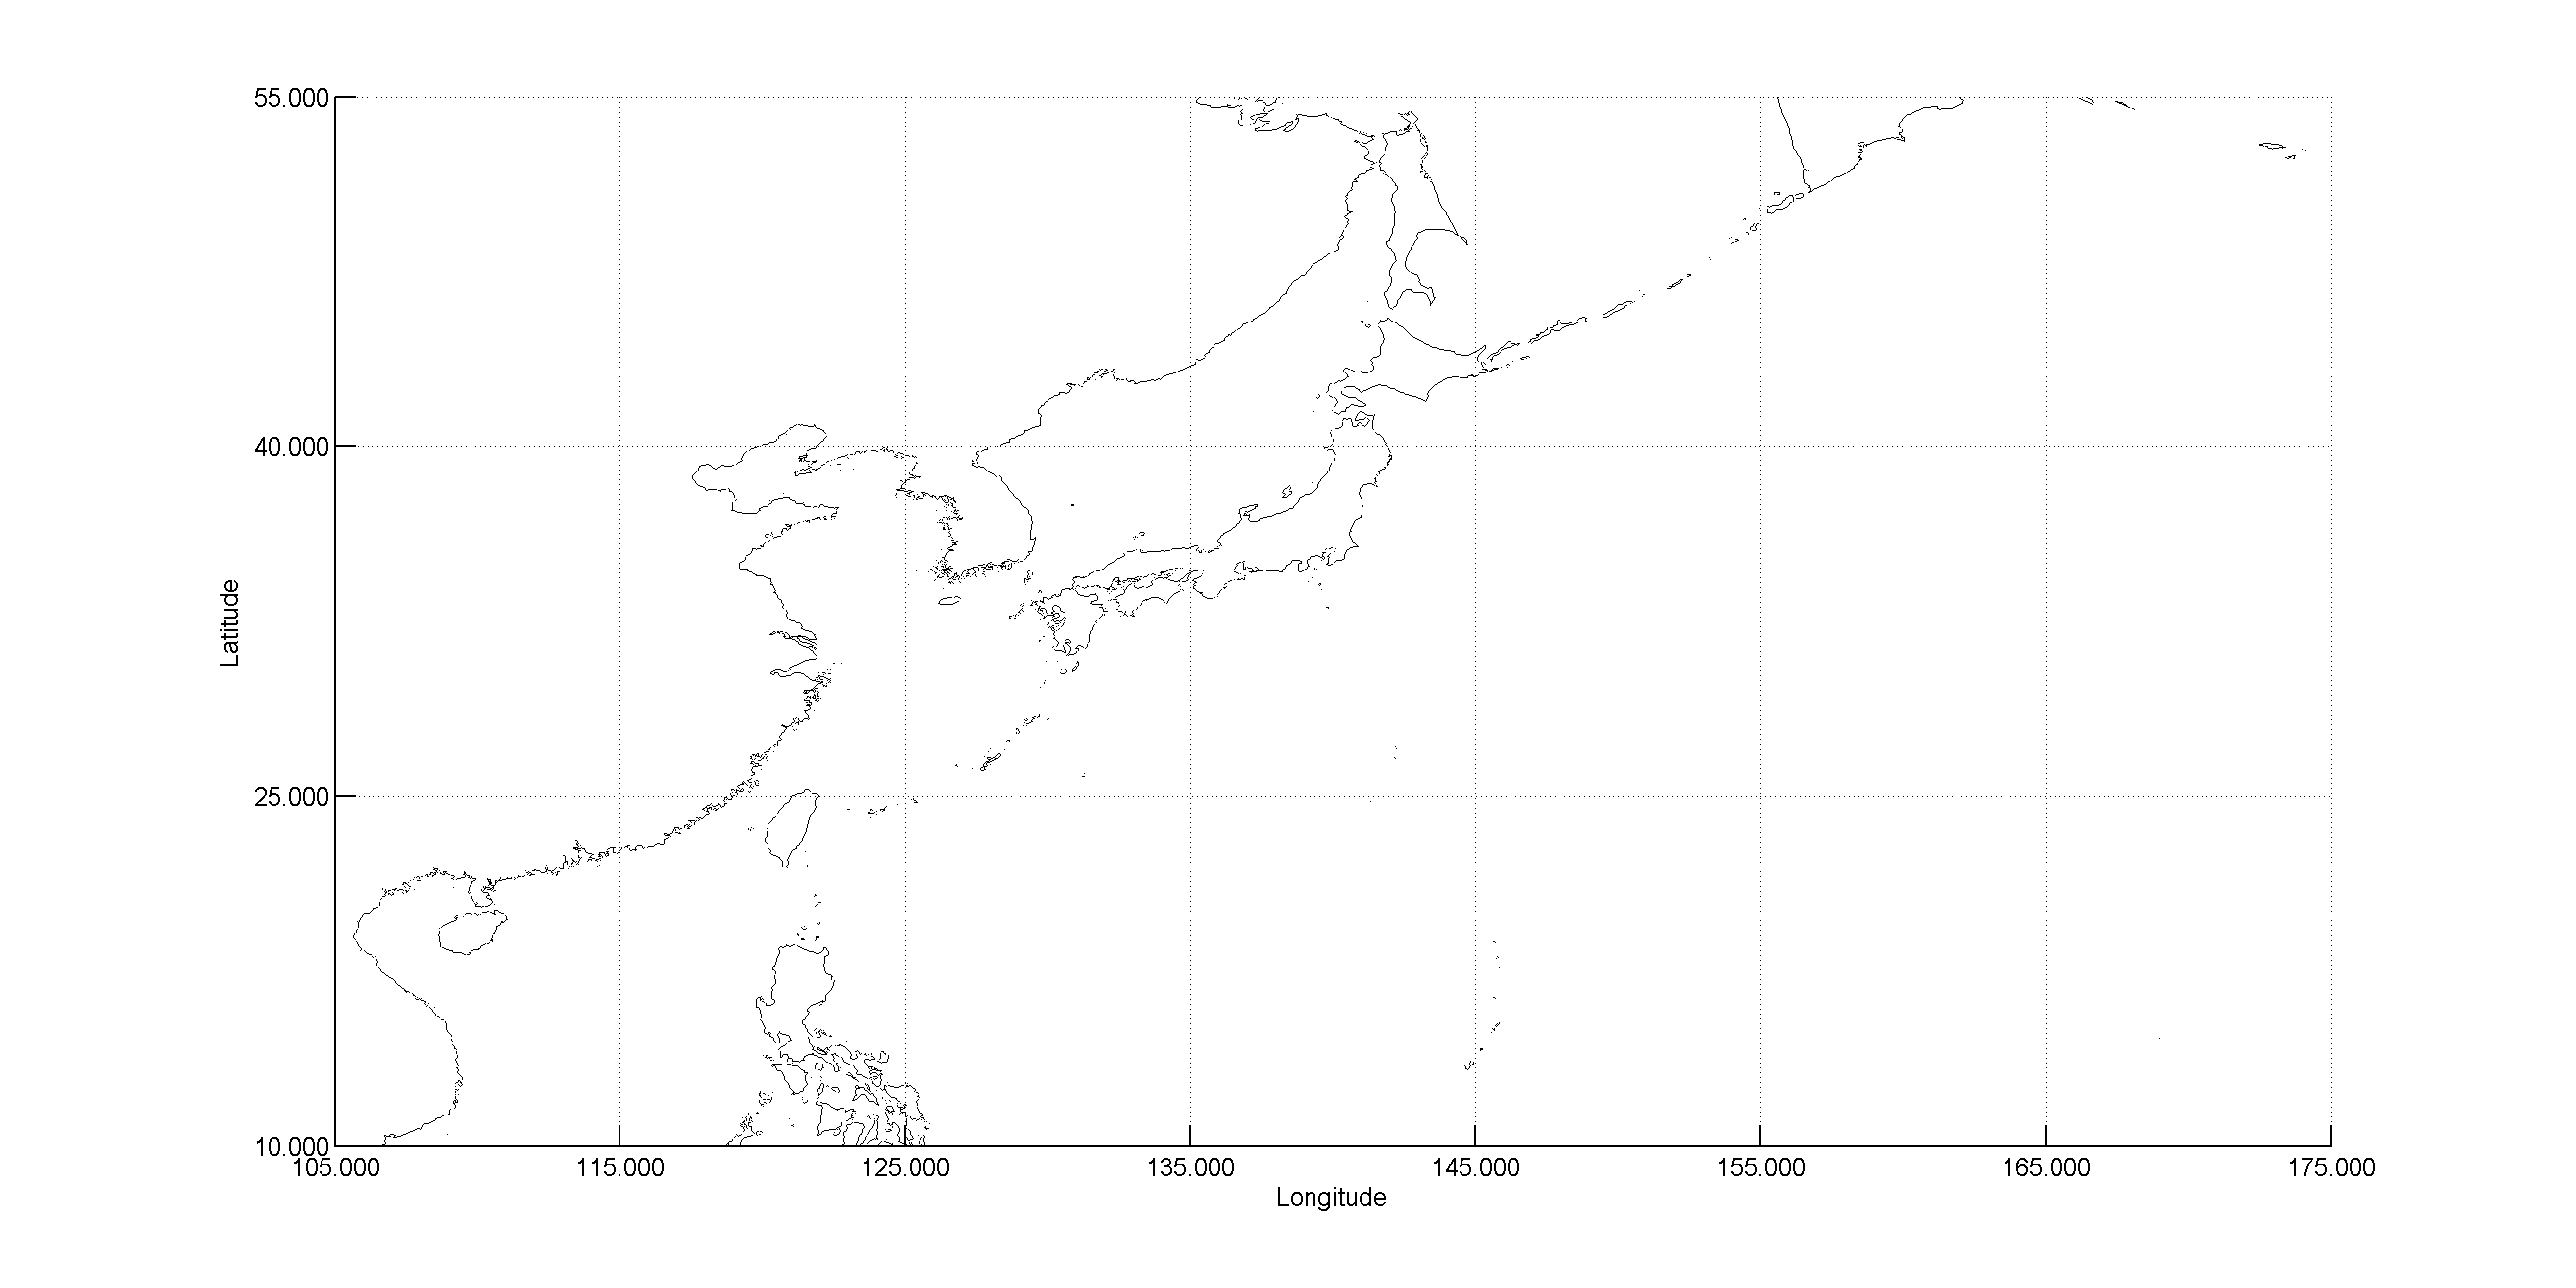 CYCLE_124 - Japan Ascending passes